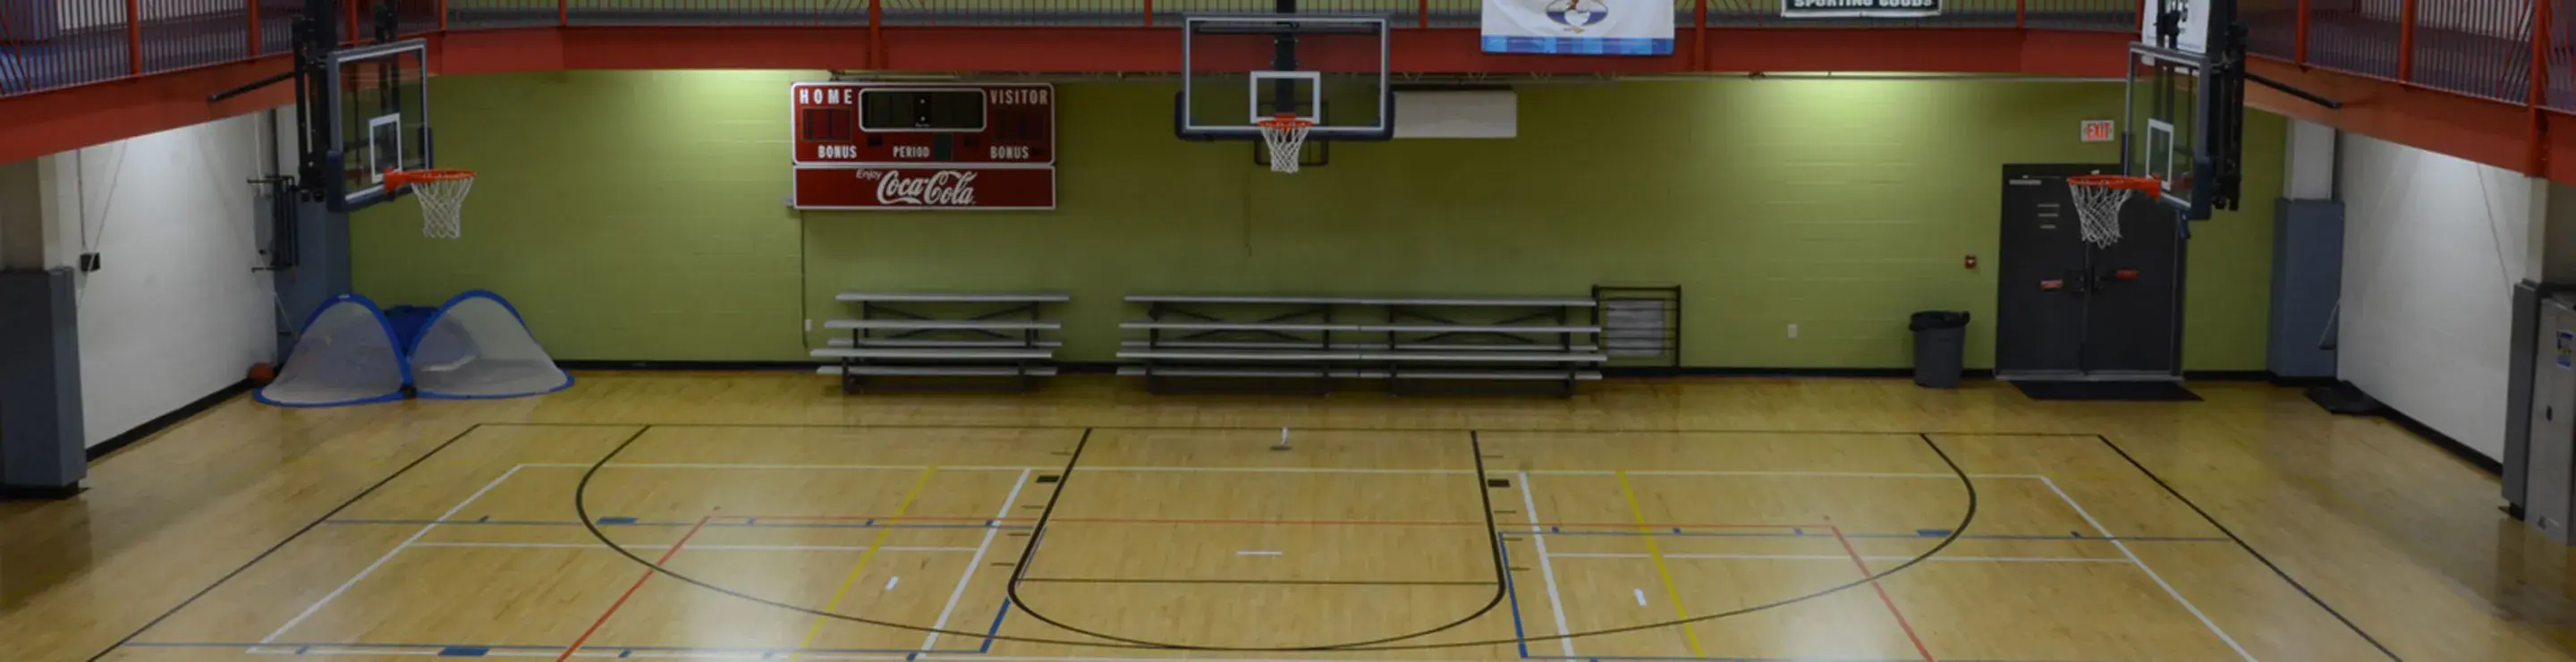 Robertson County Family YMCA Basketball Gym